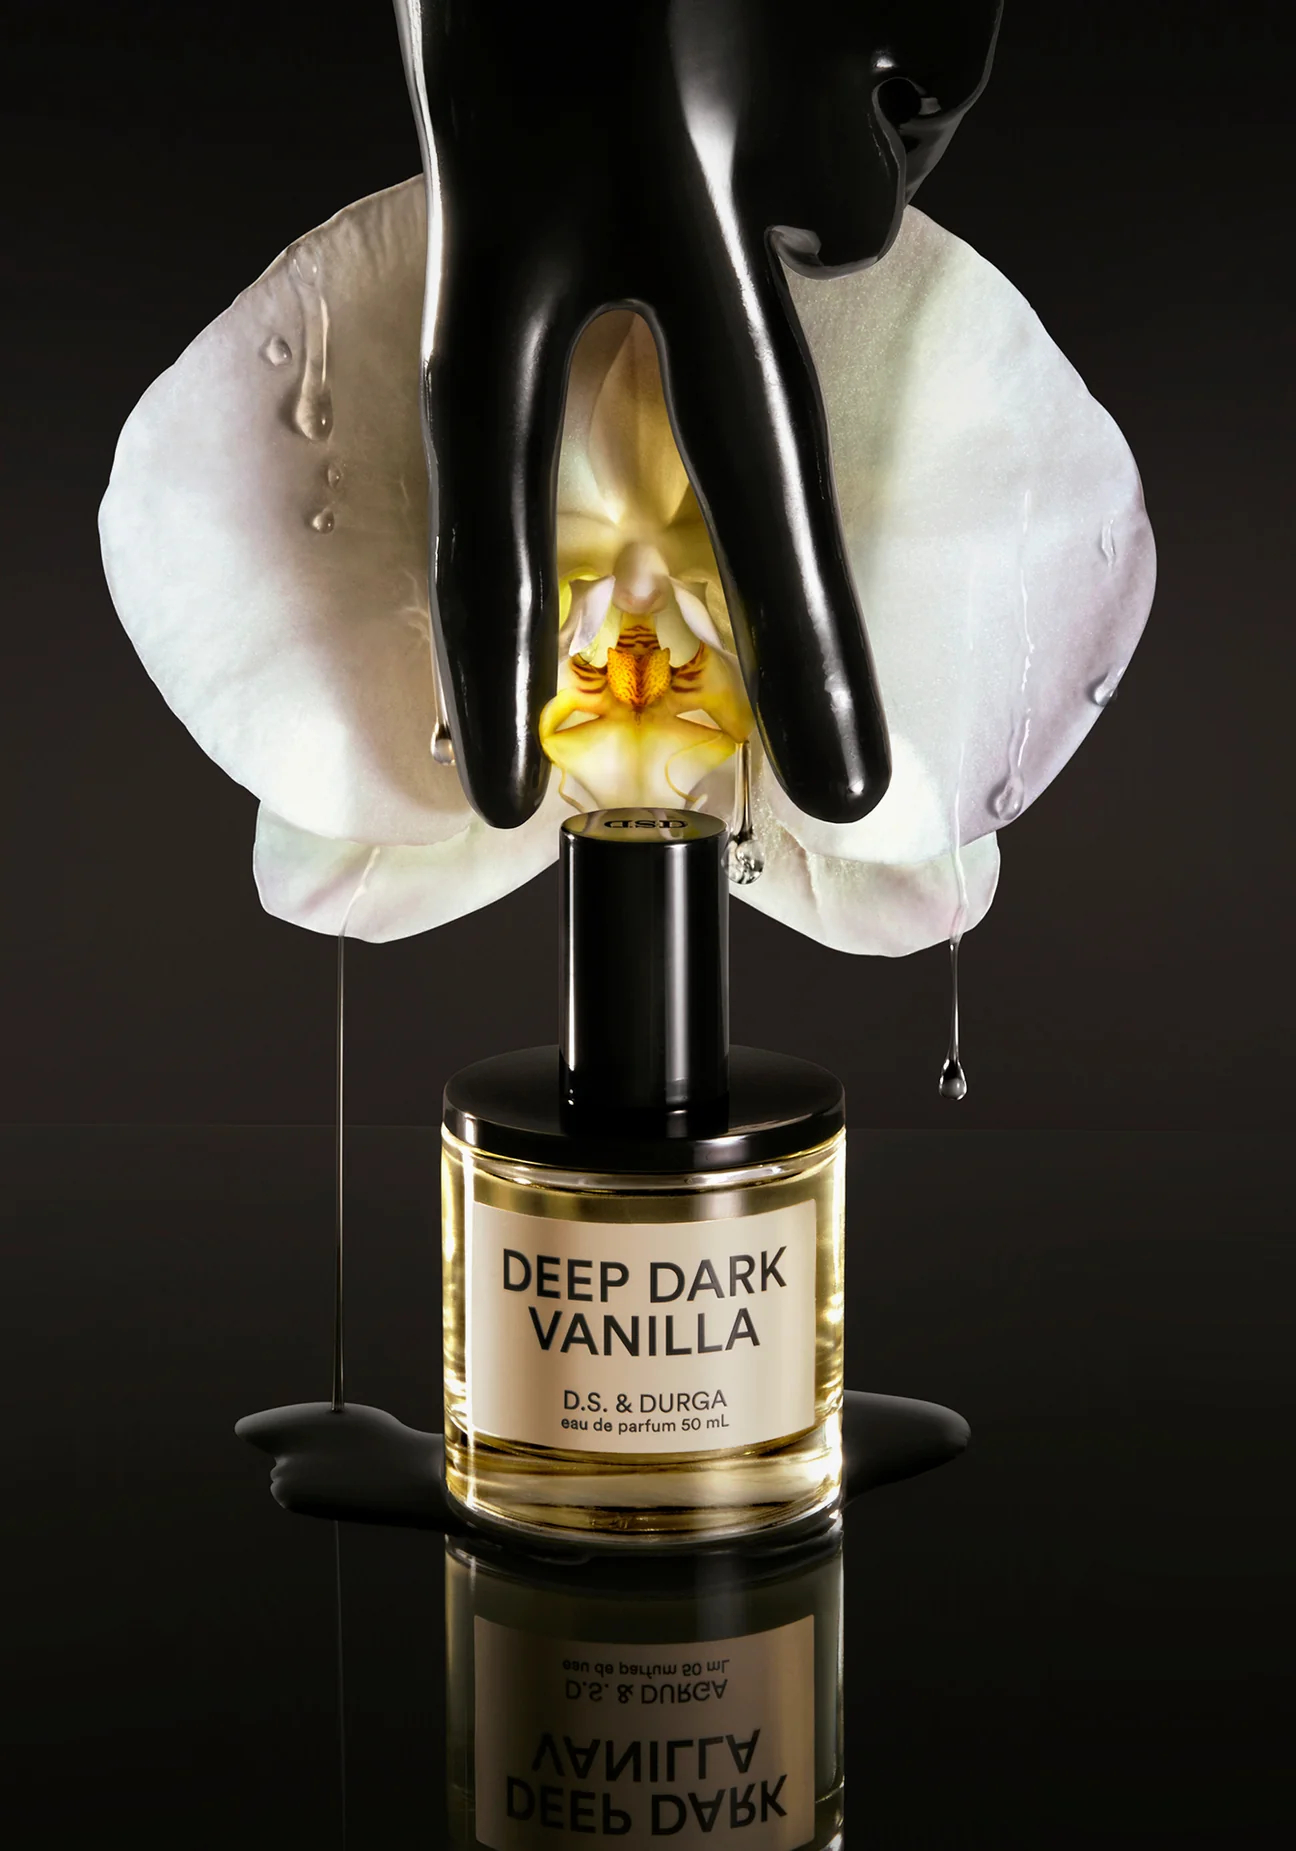 D.S. & Durga Deep Dark Vanilla perfume